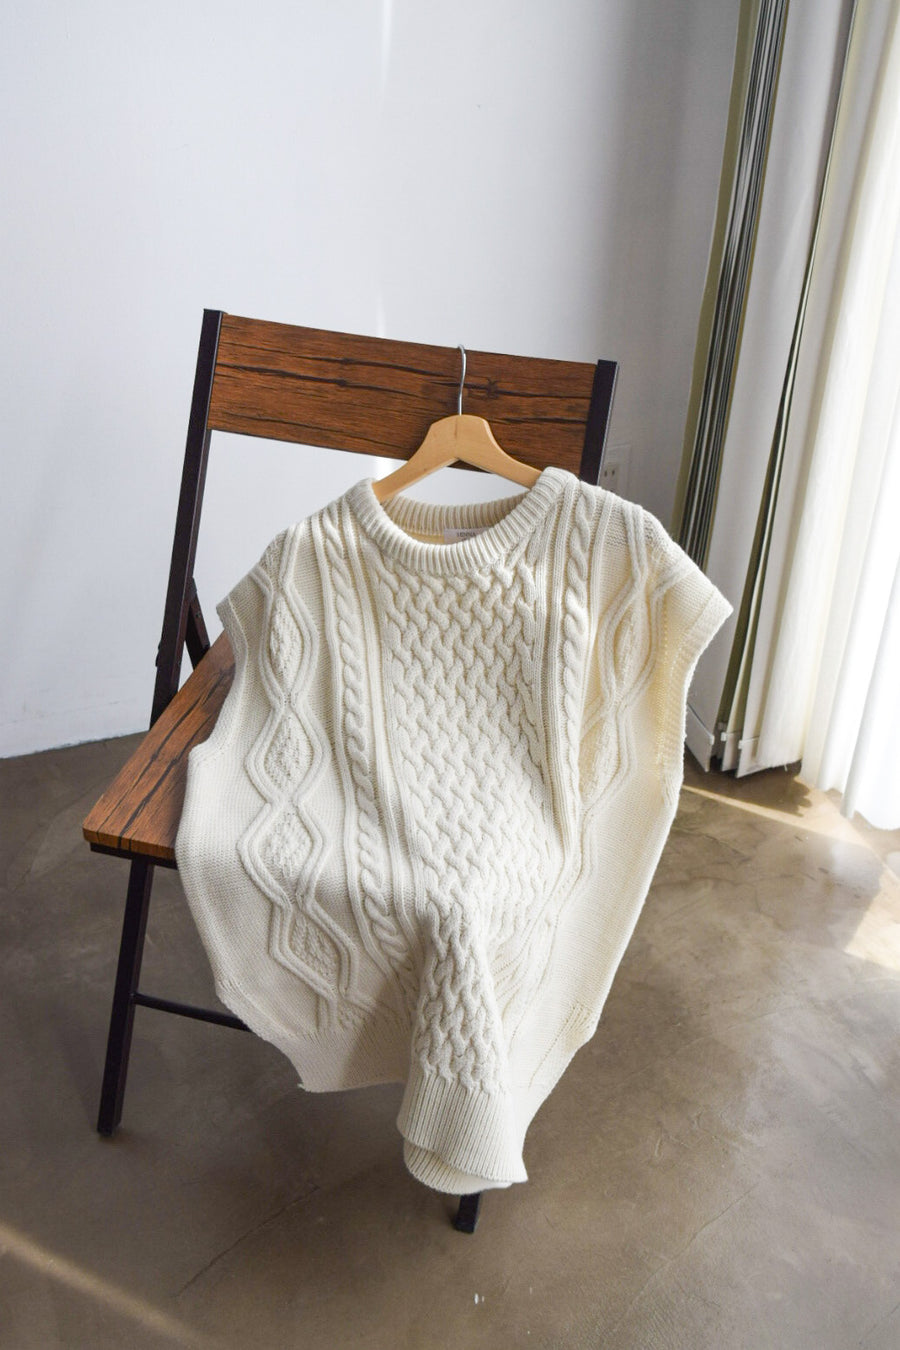 cable stitch knit vest